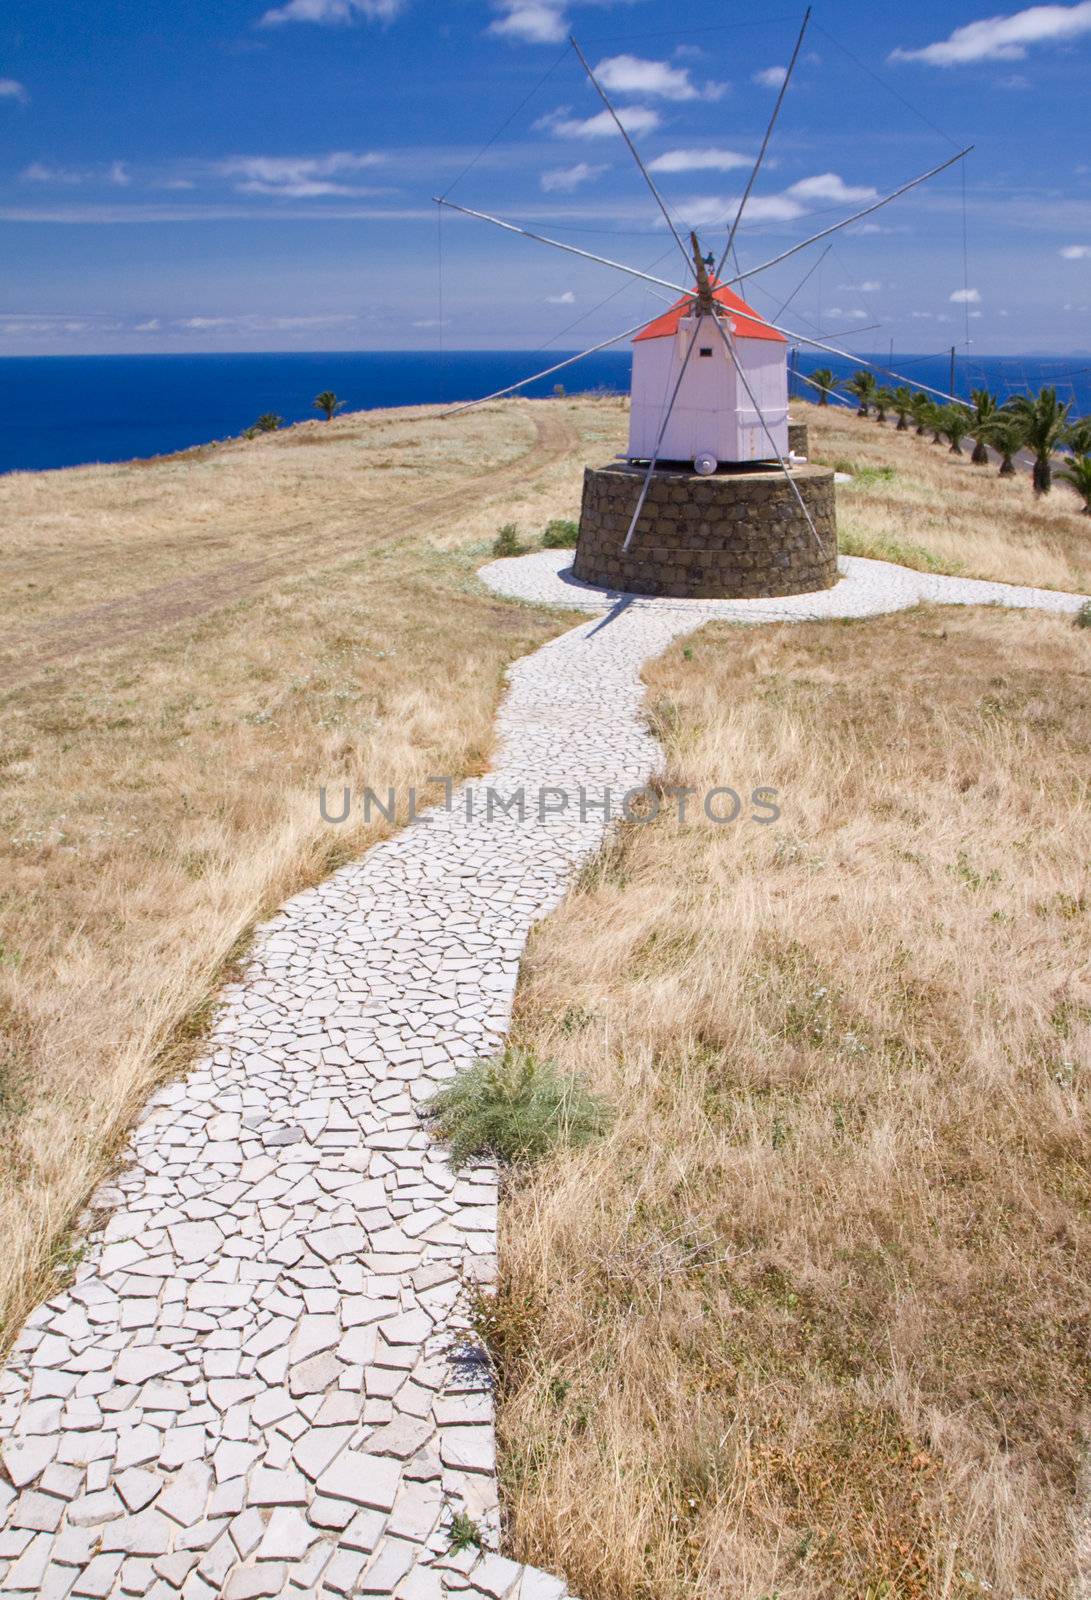 Footpath to Portuguese windmill by Gbuglok